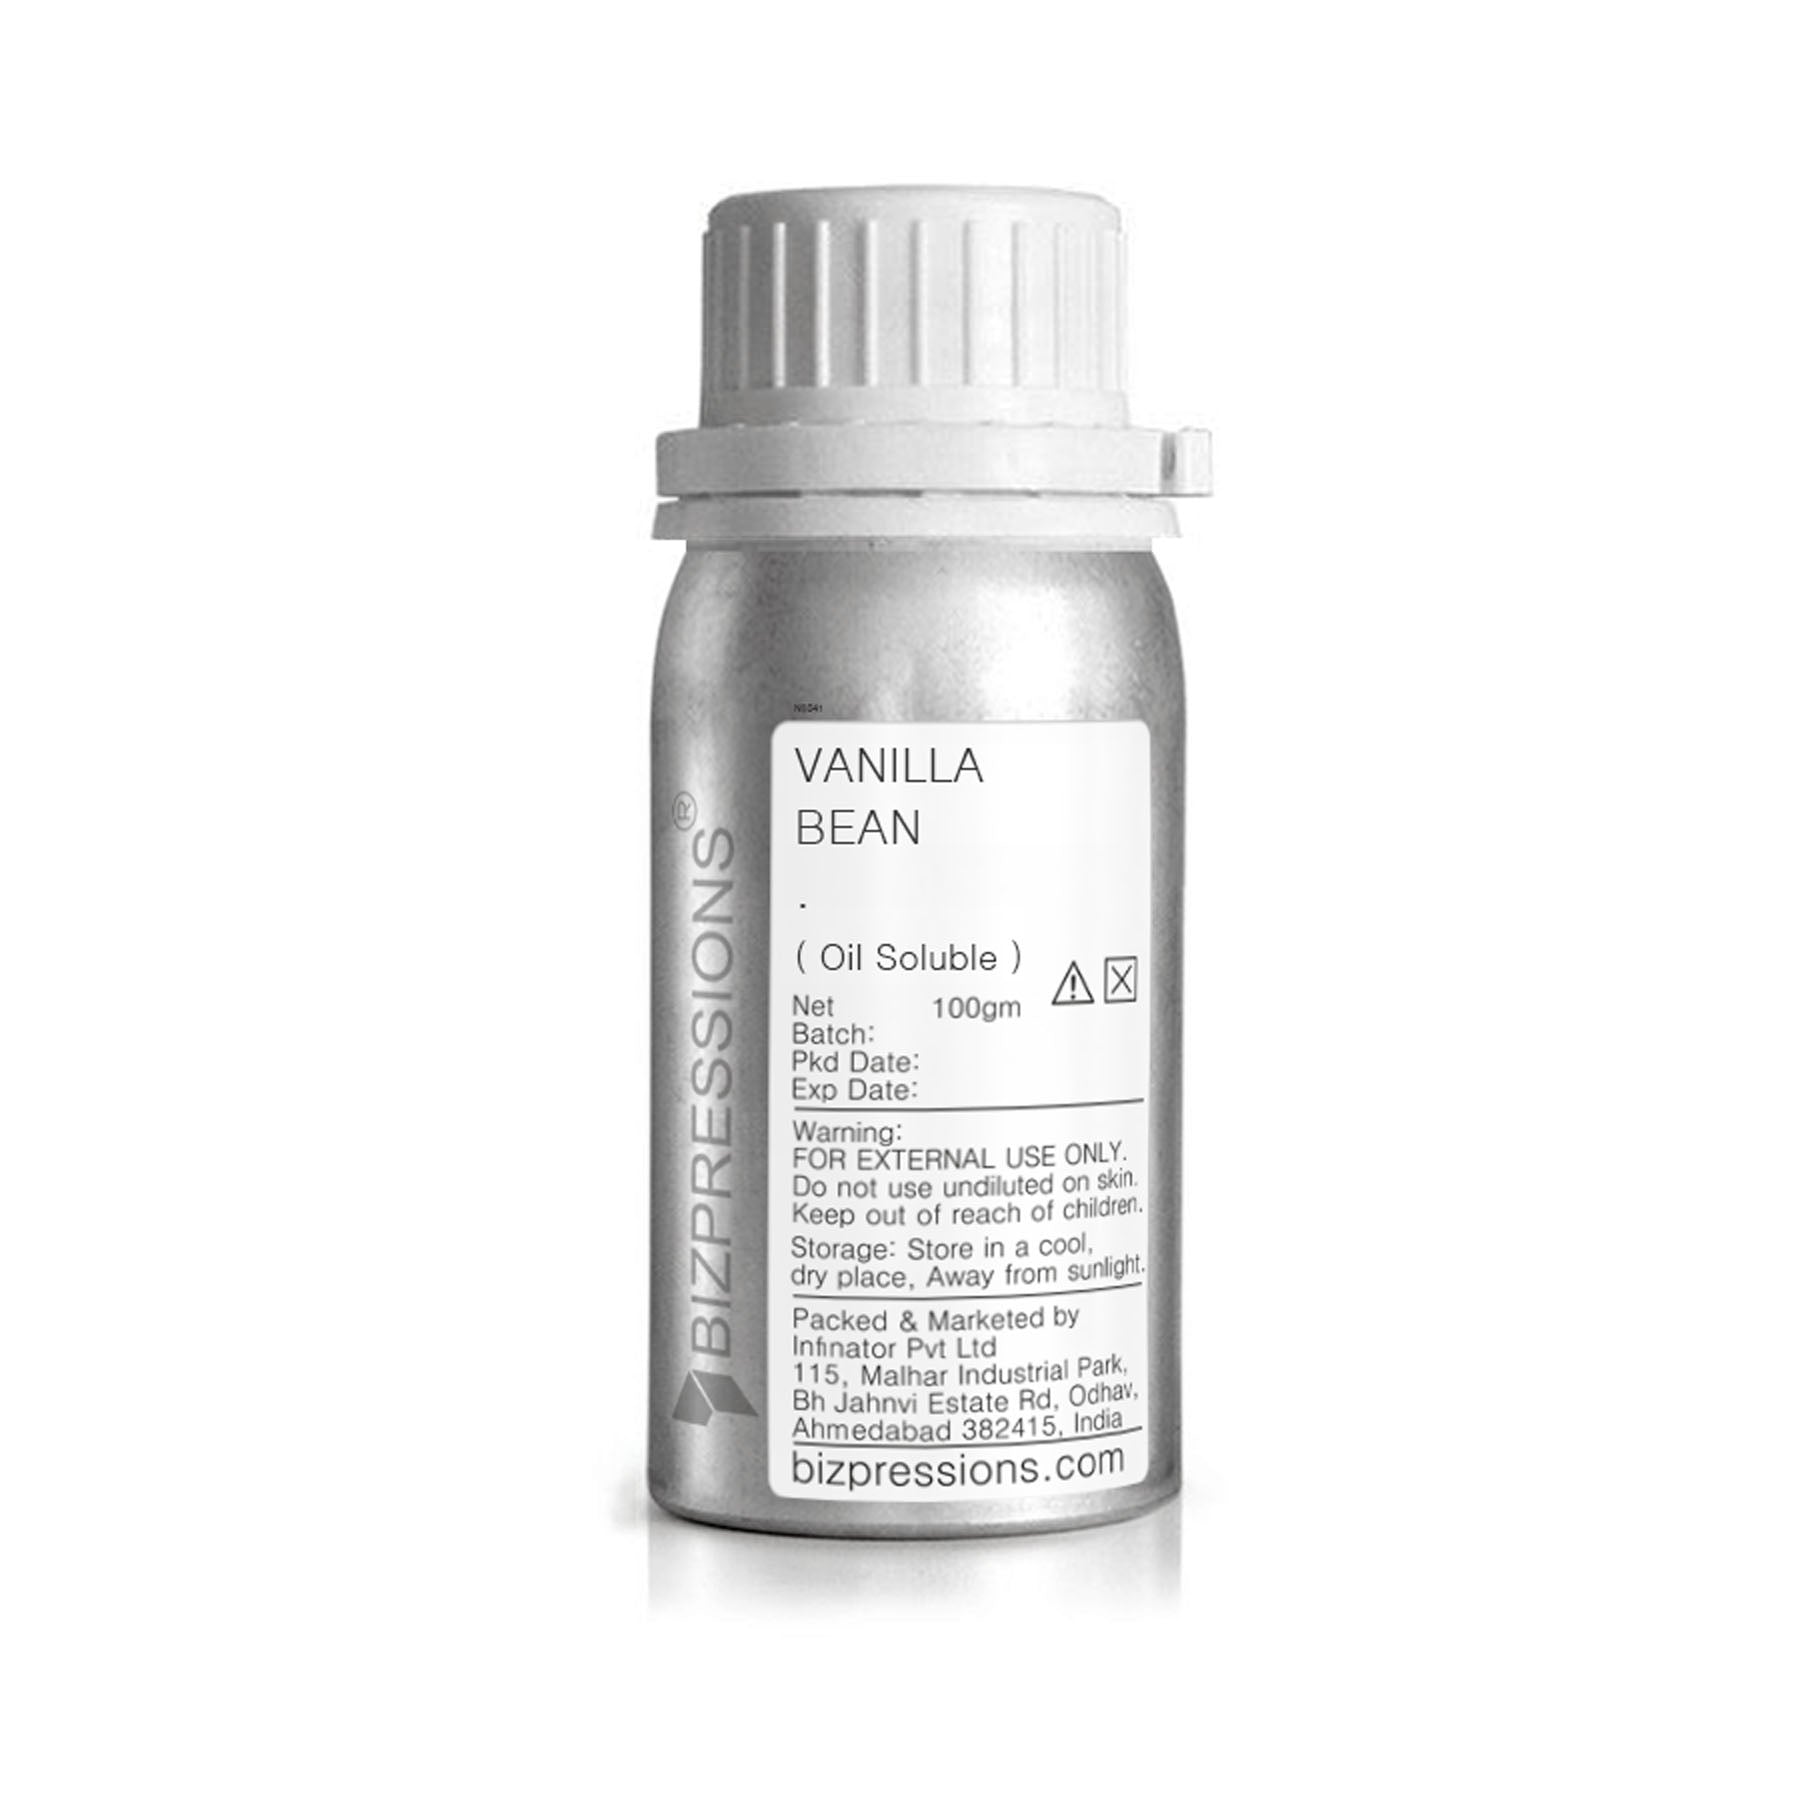 VANILLA BEAN - Fragrance ( Oil Soluble ) - 100 gm